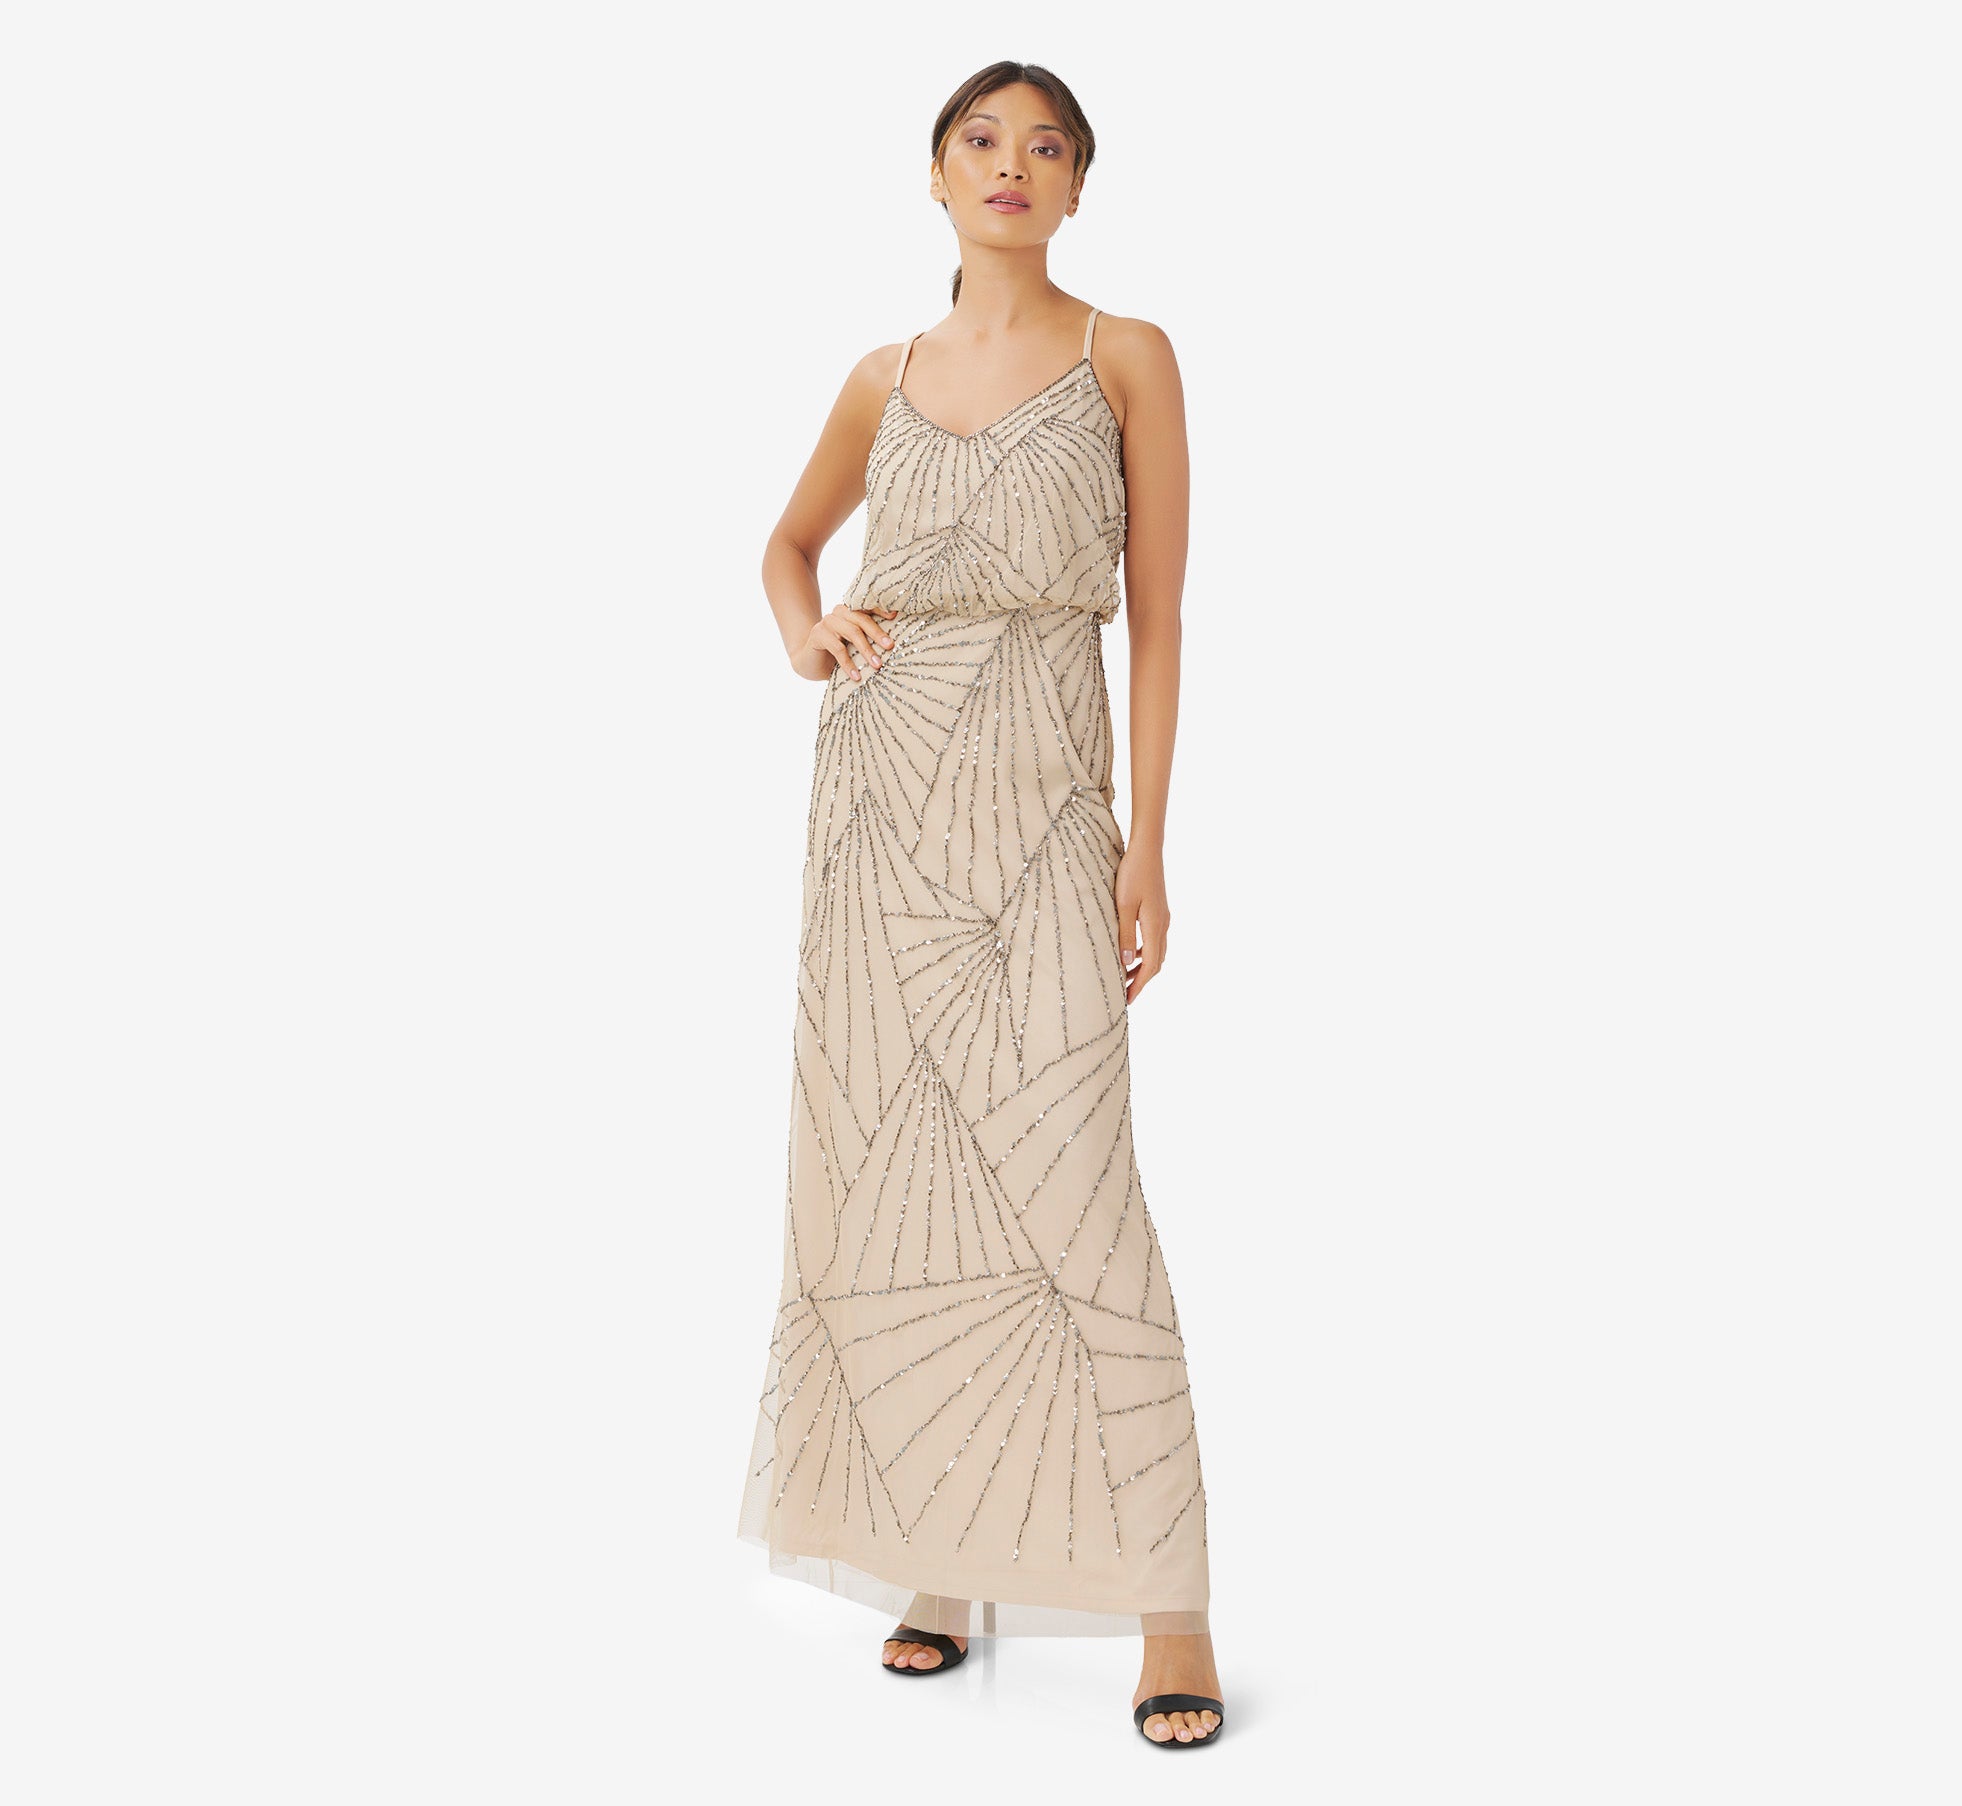 Adrianna Papell Beaded Illusion Gown Wedding Dress [WD205065] - $1,000.00 |  Weddingdresshouse